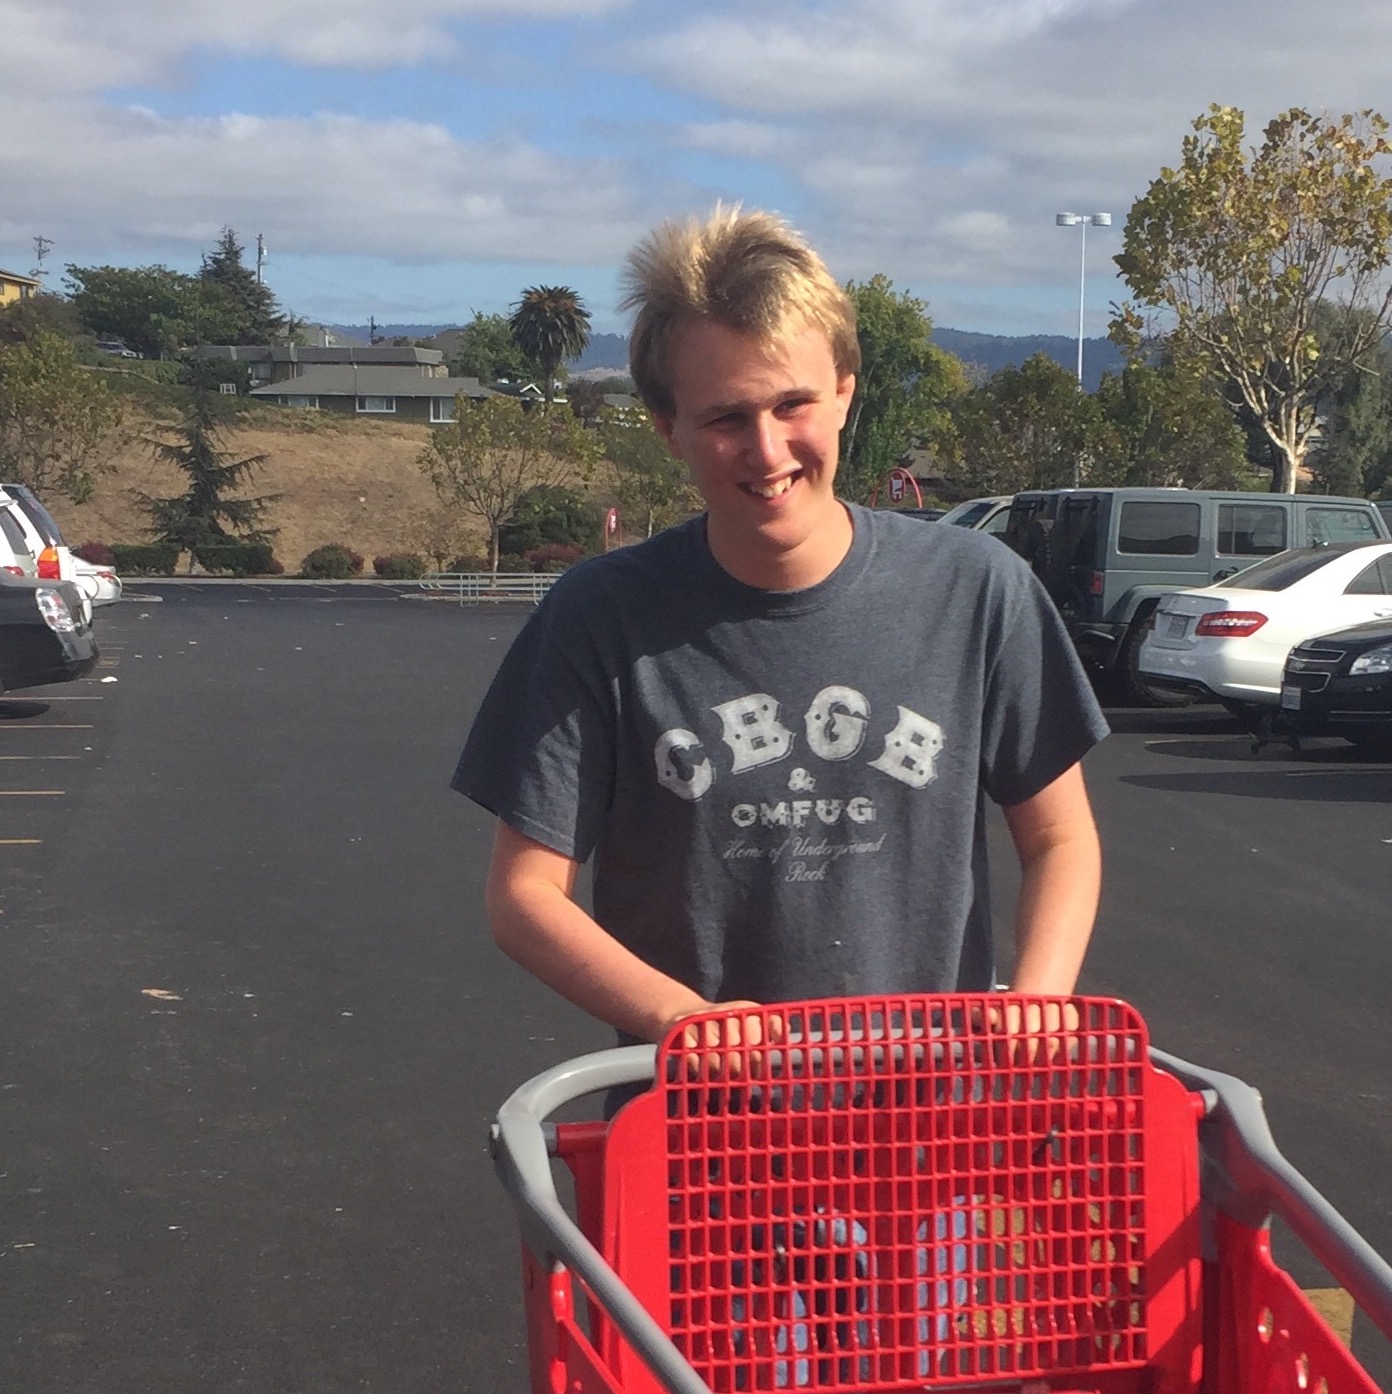 A student pushing a shopping cart